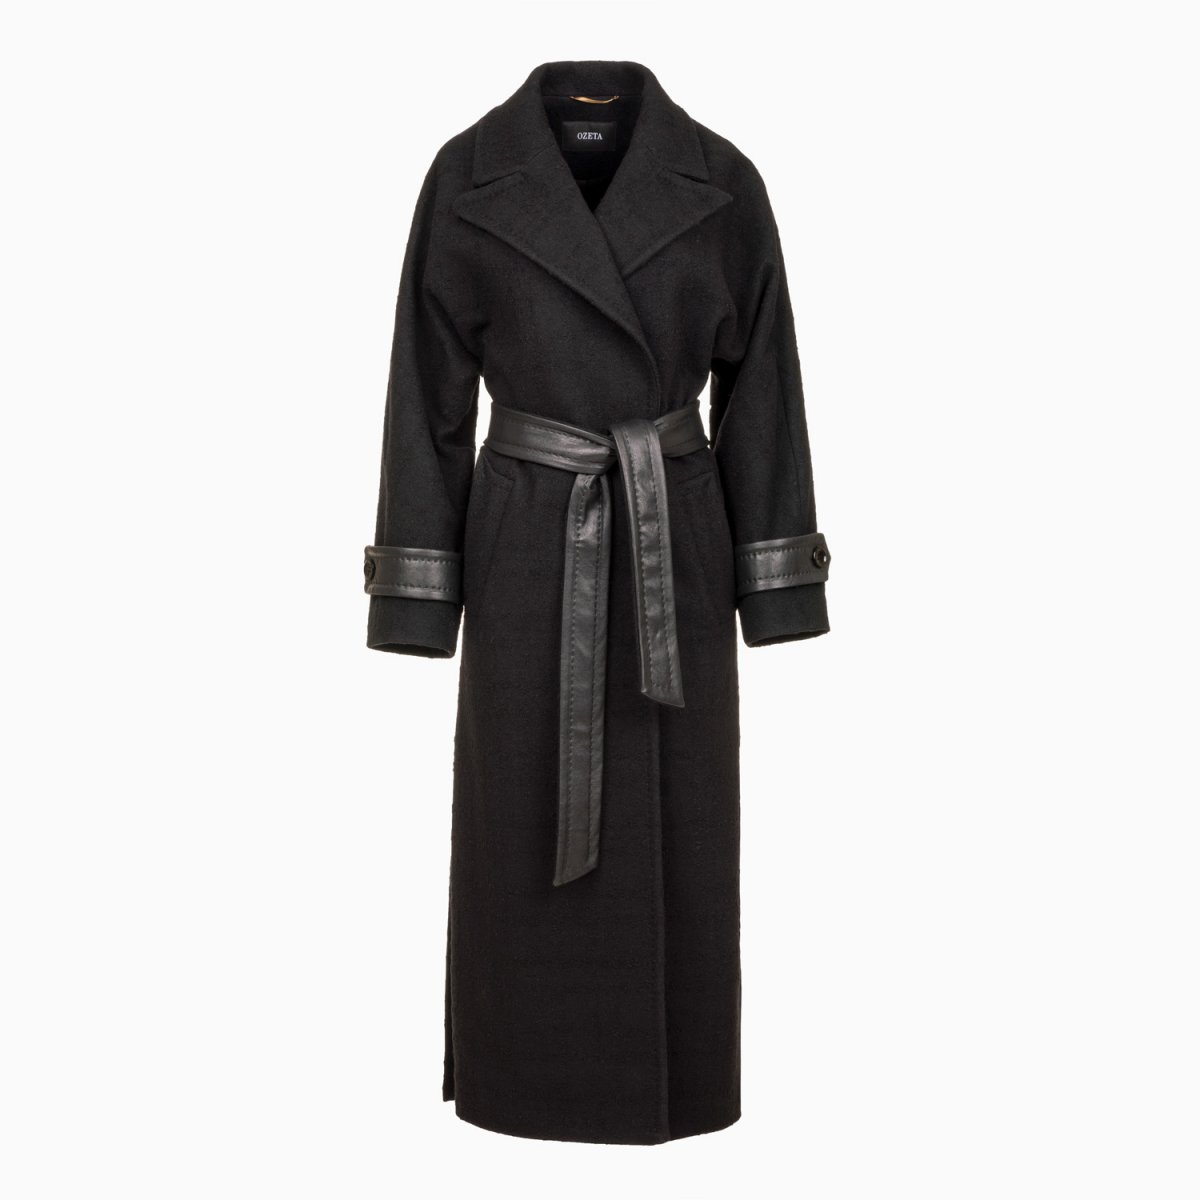 Kimono-Damenmantel in schwarz mit Lederdetails - Oversize Fit